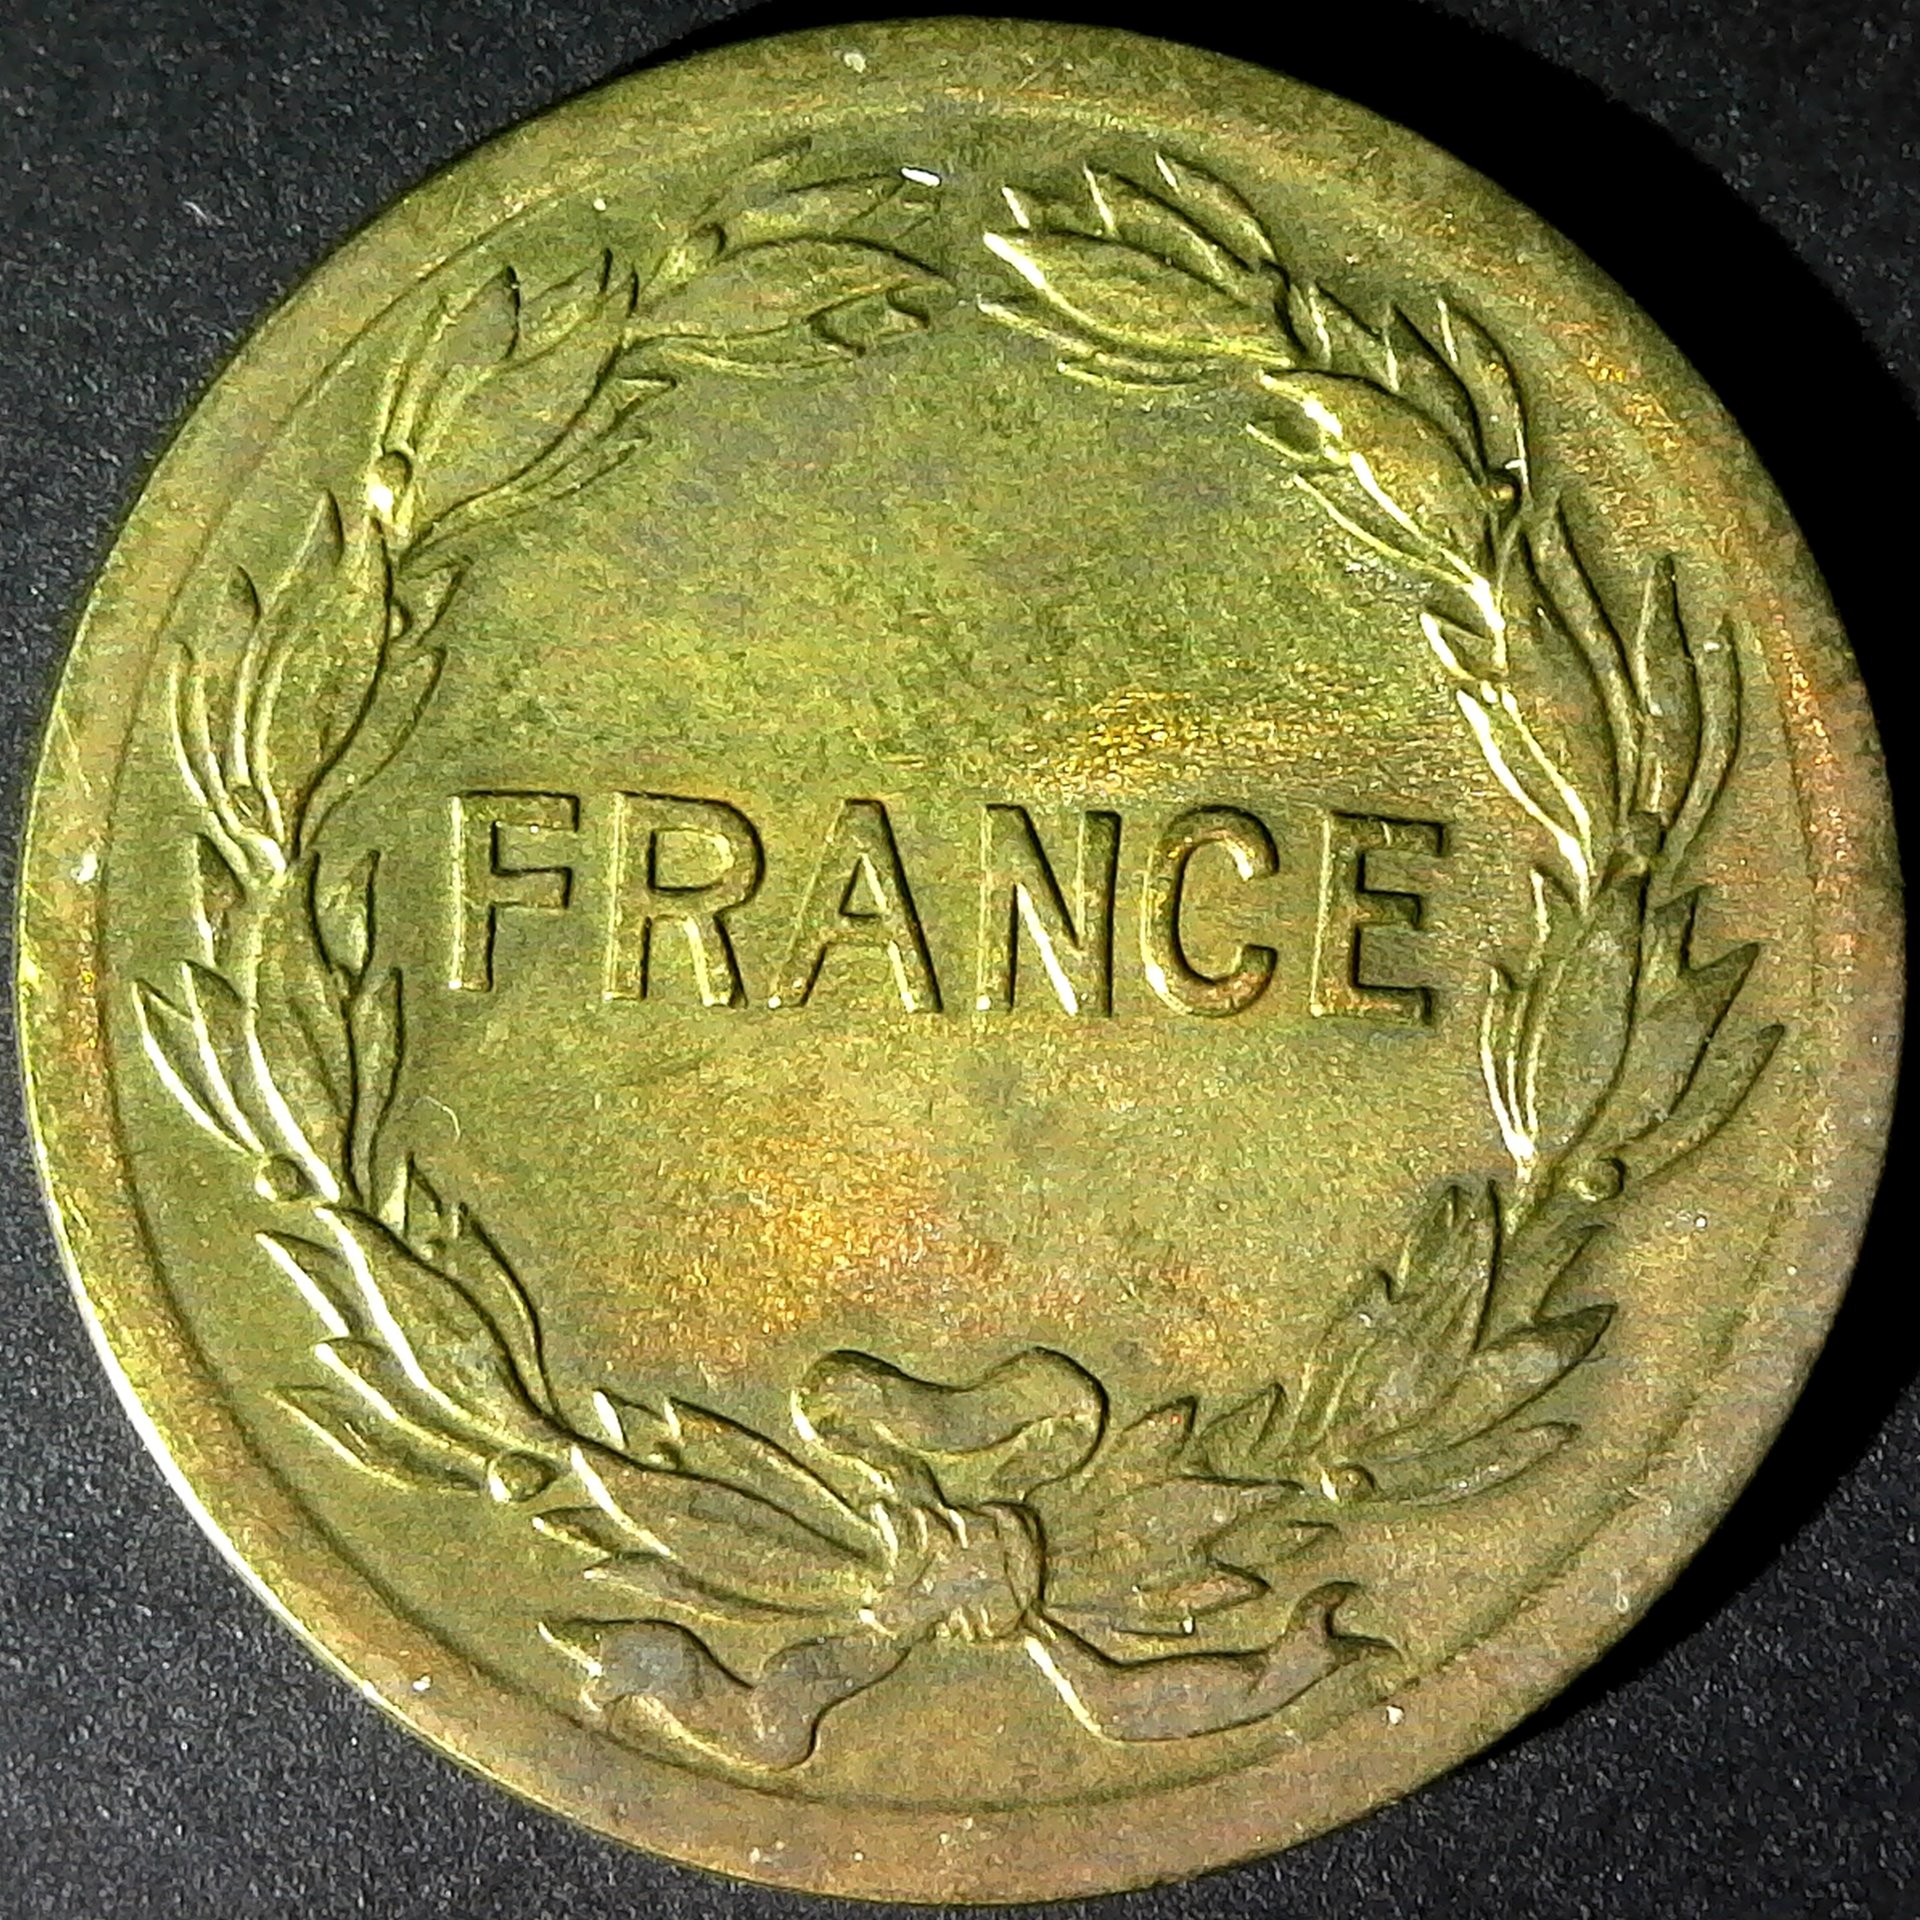 France 2 Francs 1944 rev.jpg